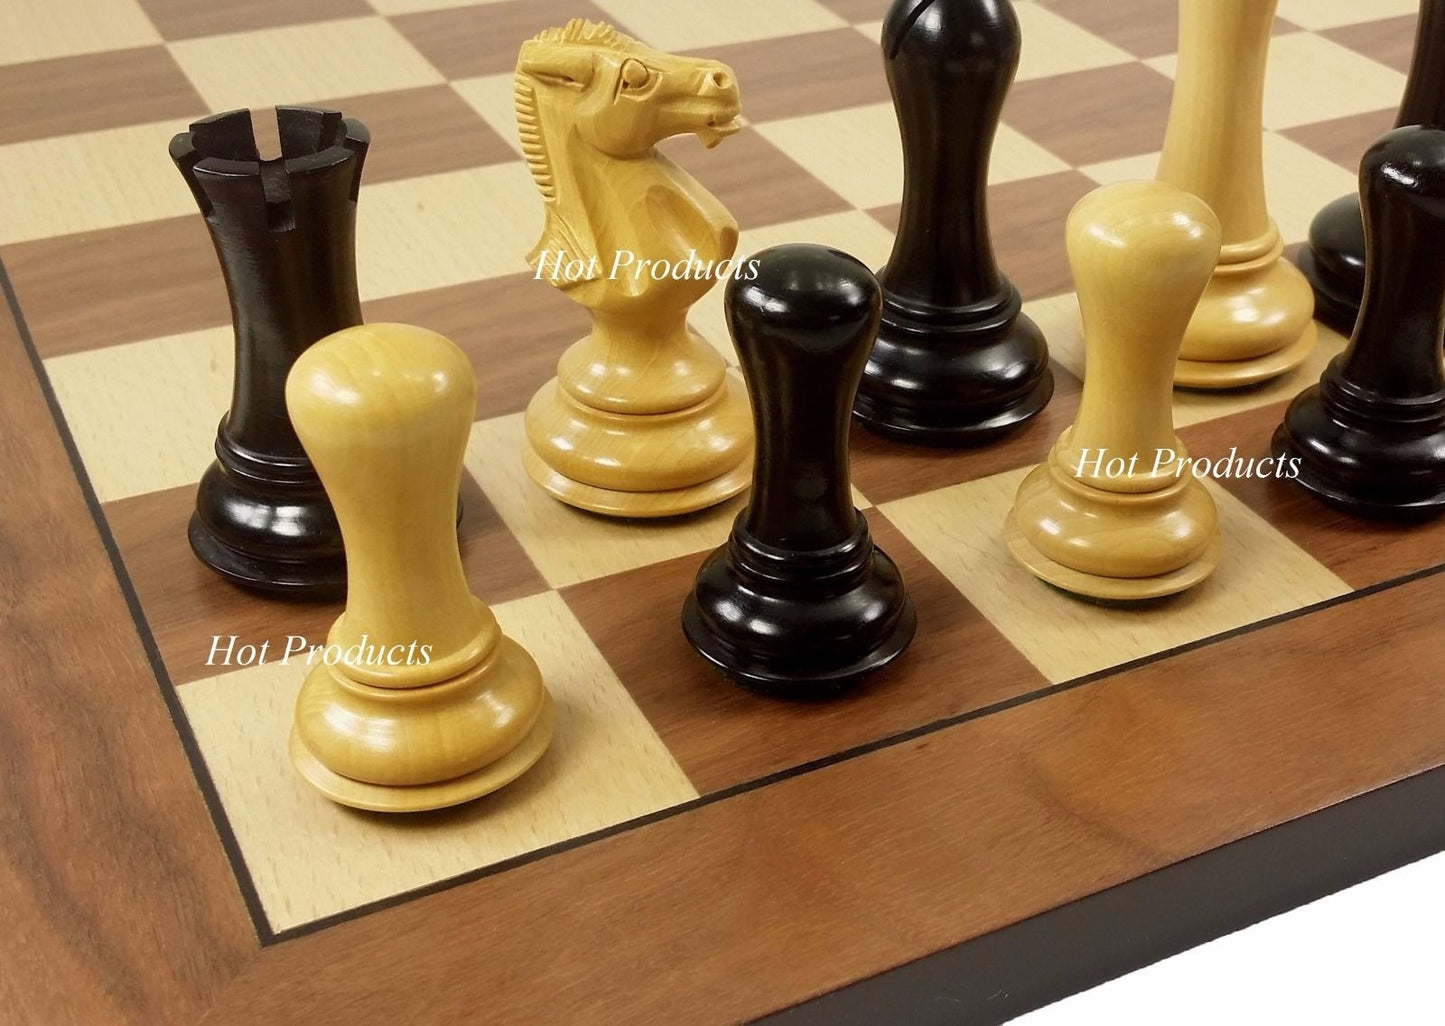 4 Q Black & Natural Empire Modern Staunton Wood Chess Set Walnut Maple Board 19"